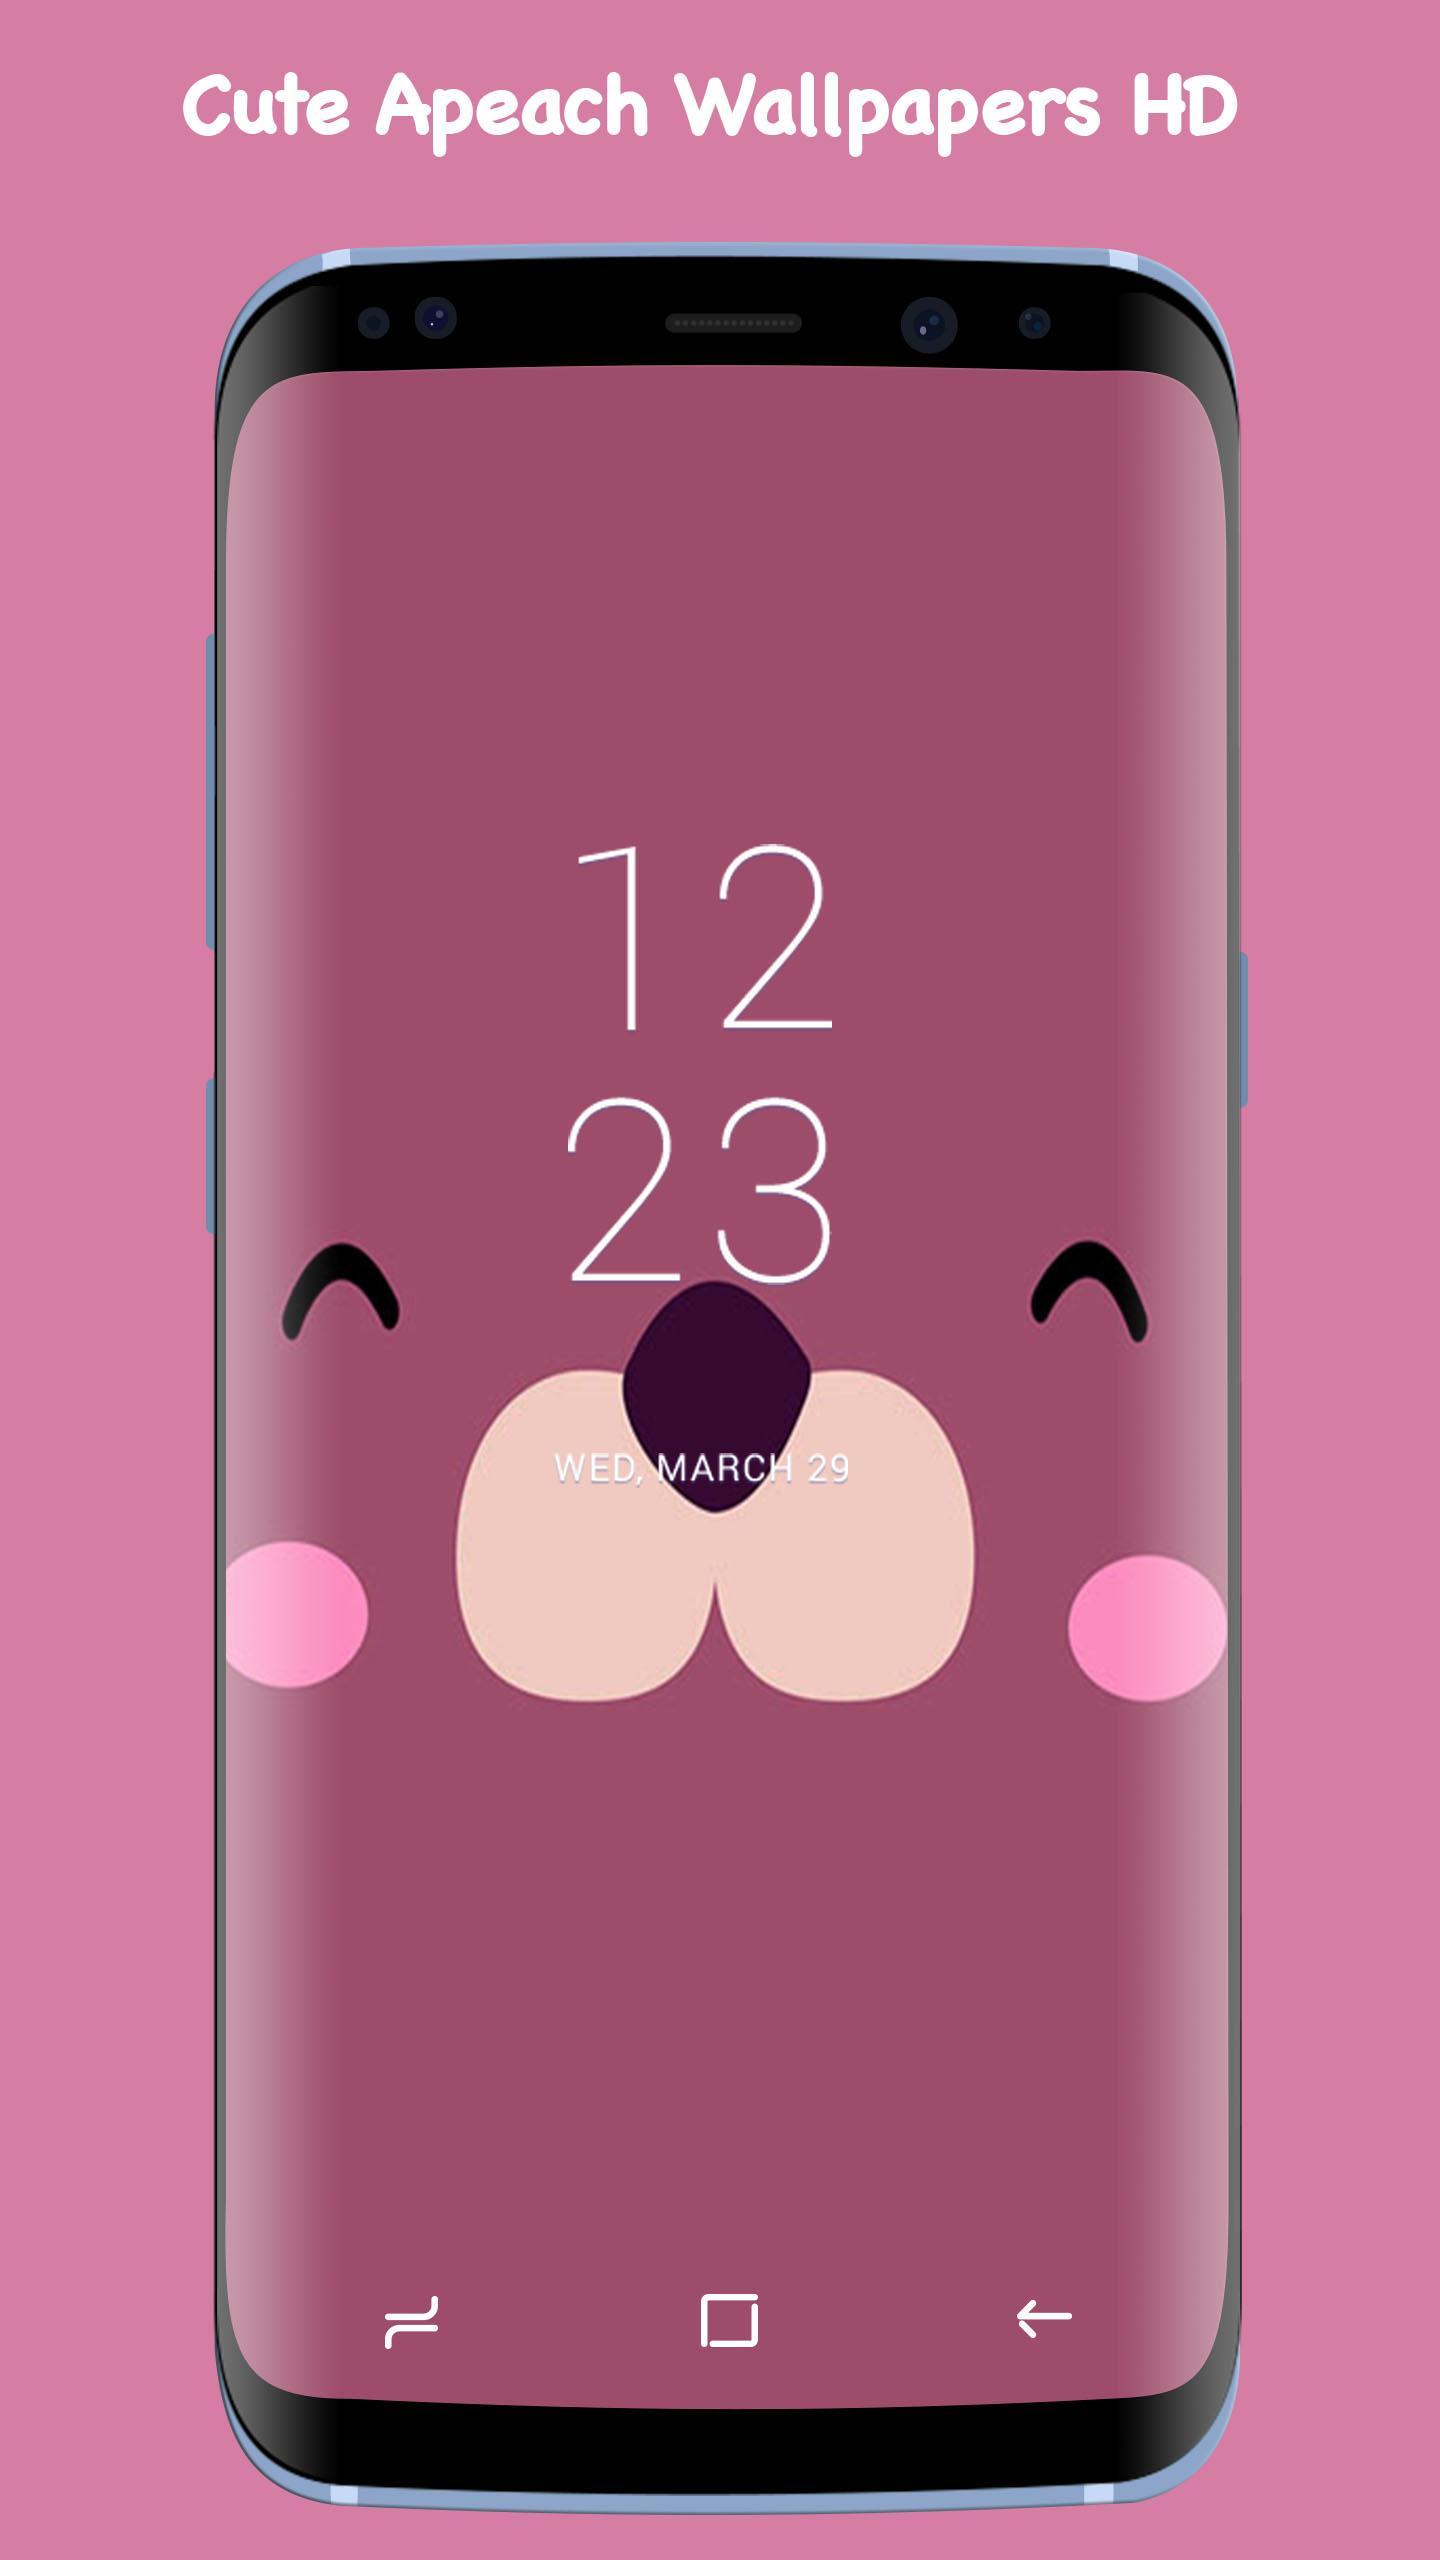 35 Gambar Wallpaper Hd Android Cute terbaru 2020